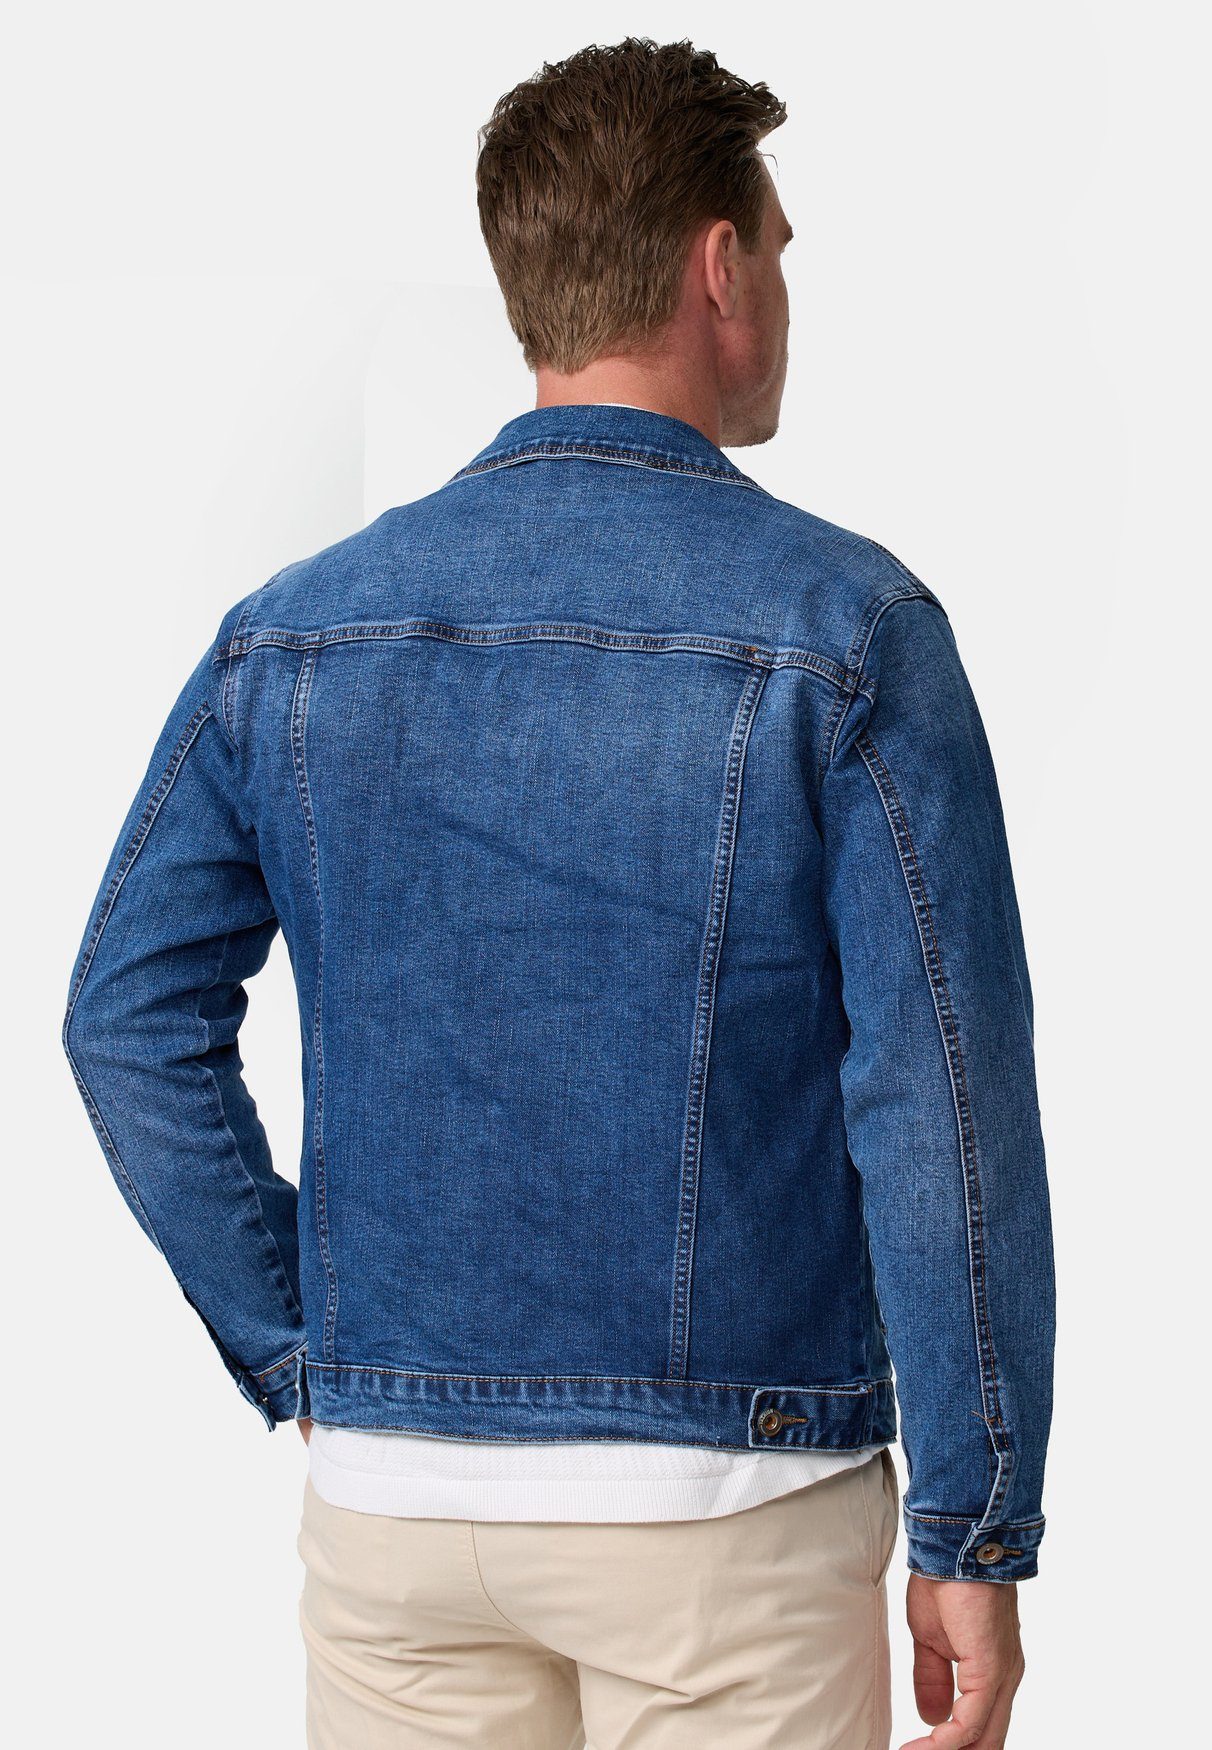 Jeansjacke Jacke in Biker Stone Jeans 5 5924 Denim Classic Giani Dunkelblau Wash